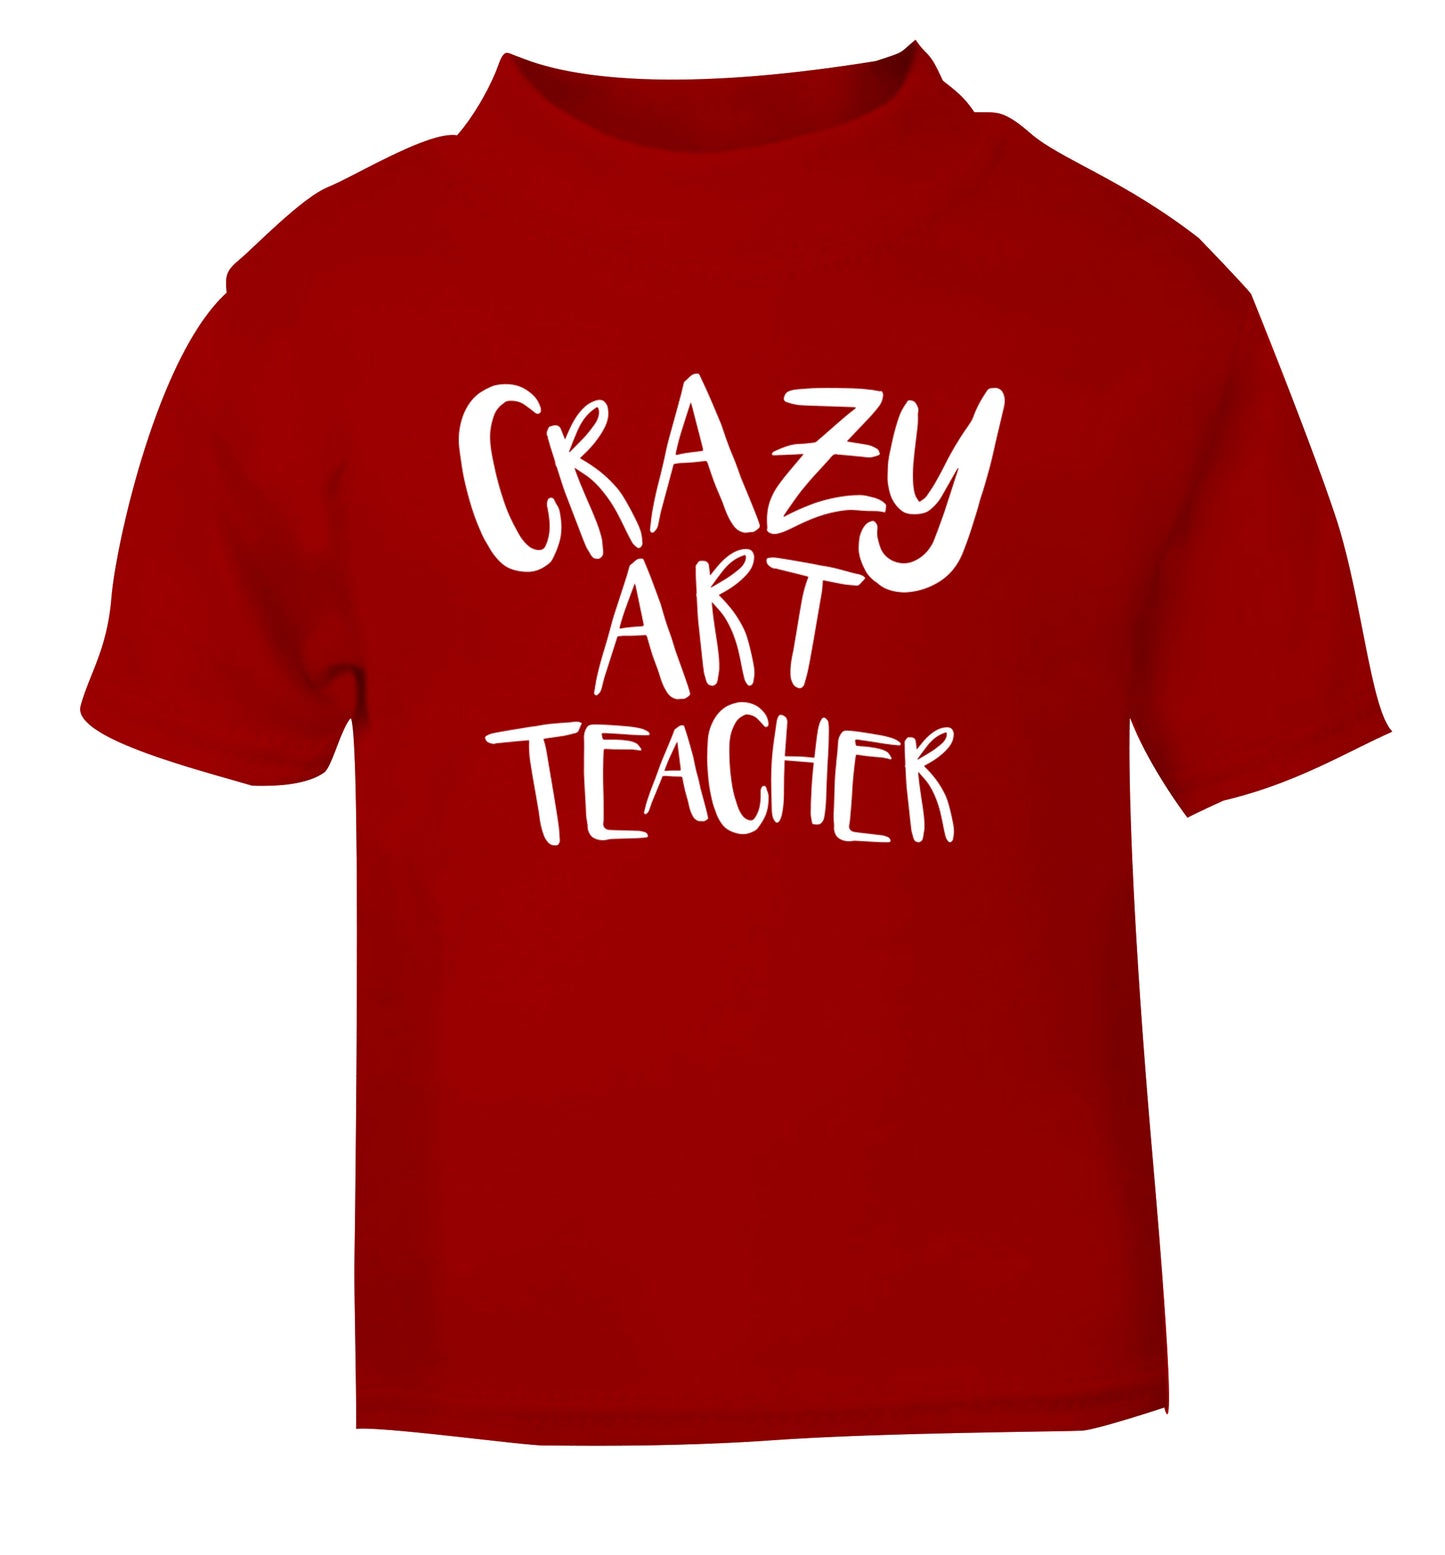 Crazy art teacher red Baby Toddler Tshirt 2 Years